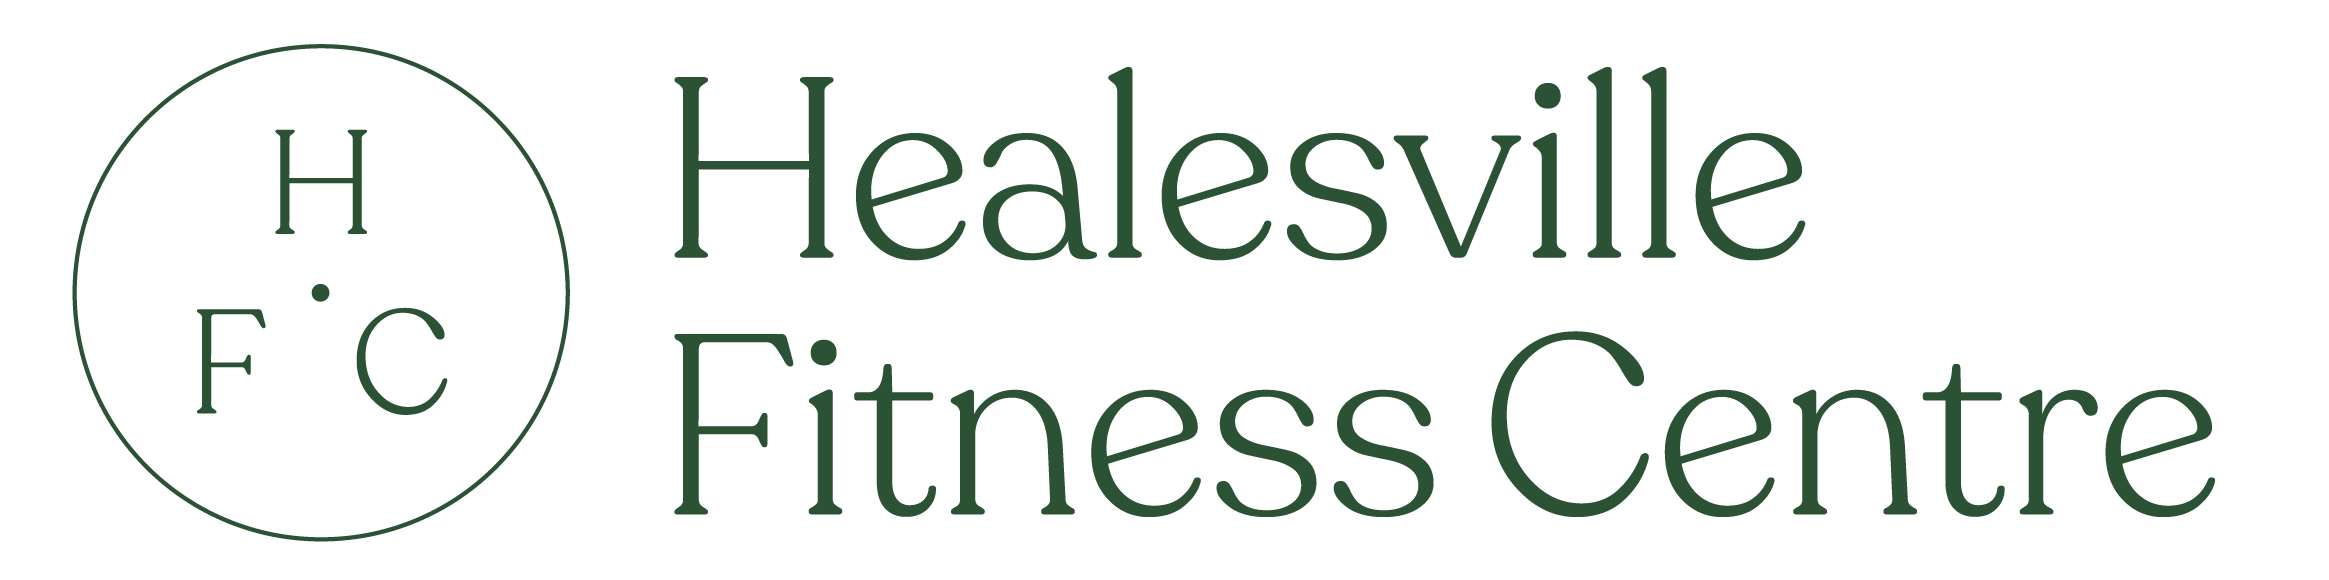 Healesville Fitness Centre